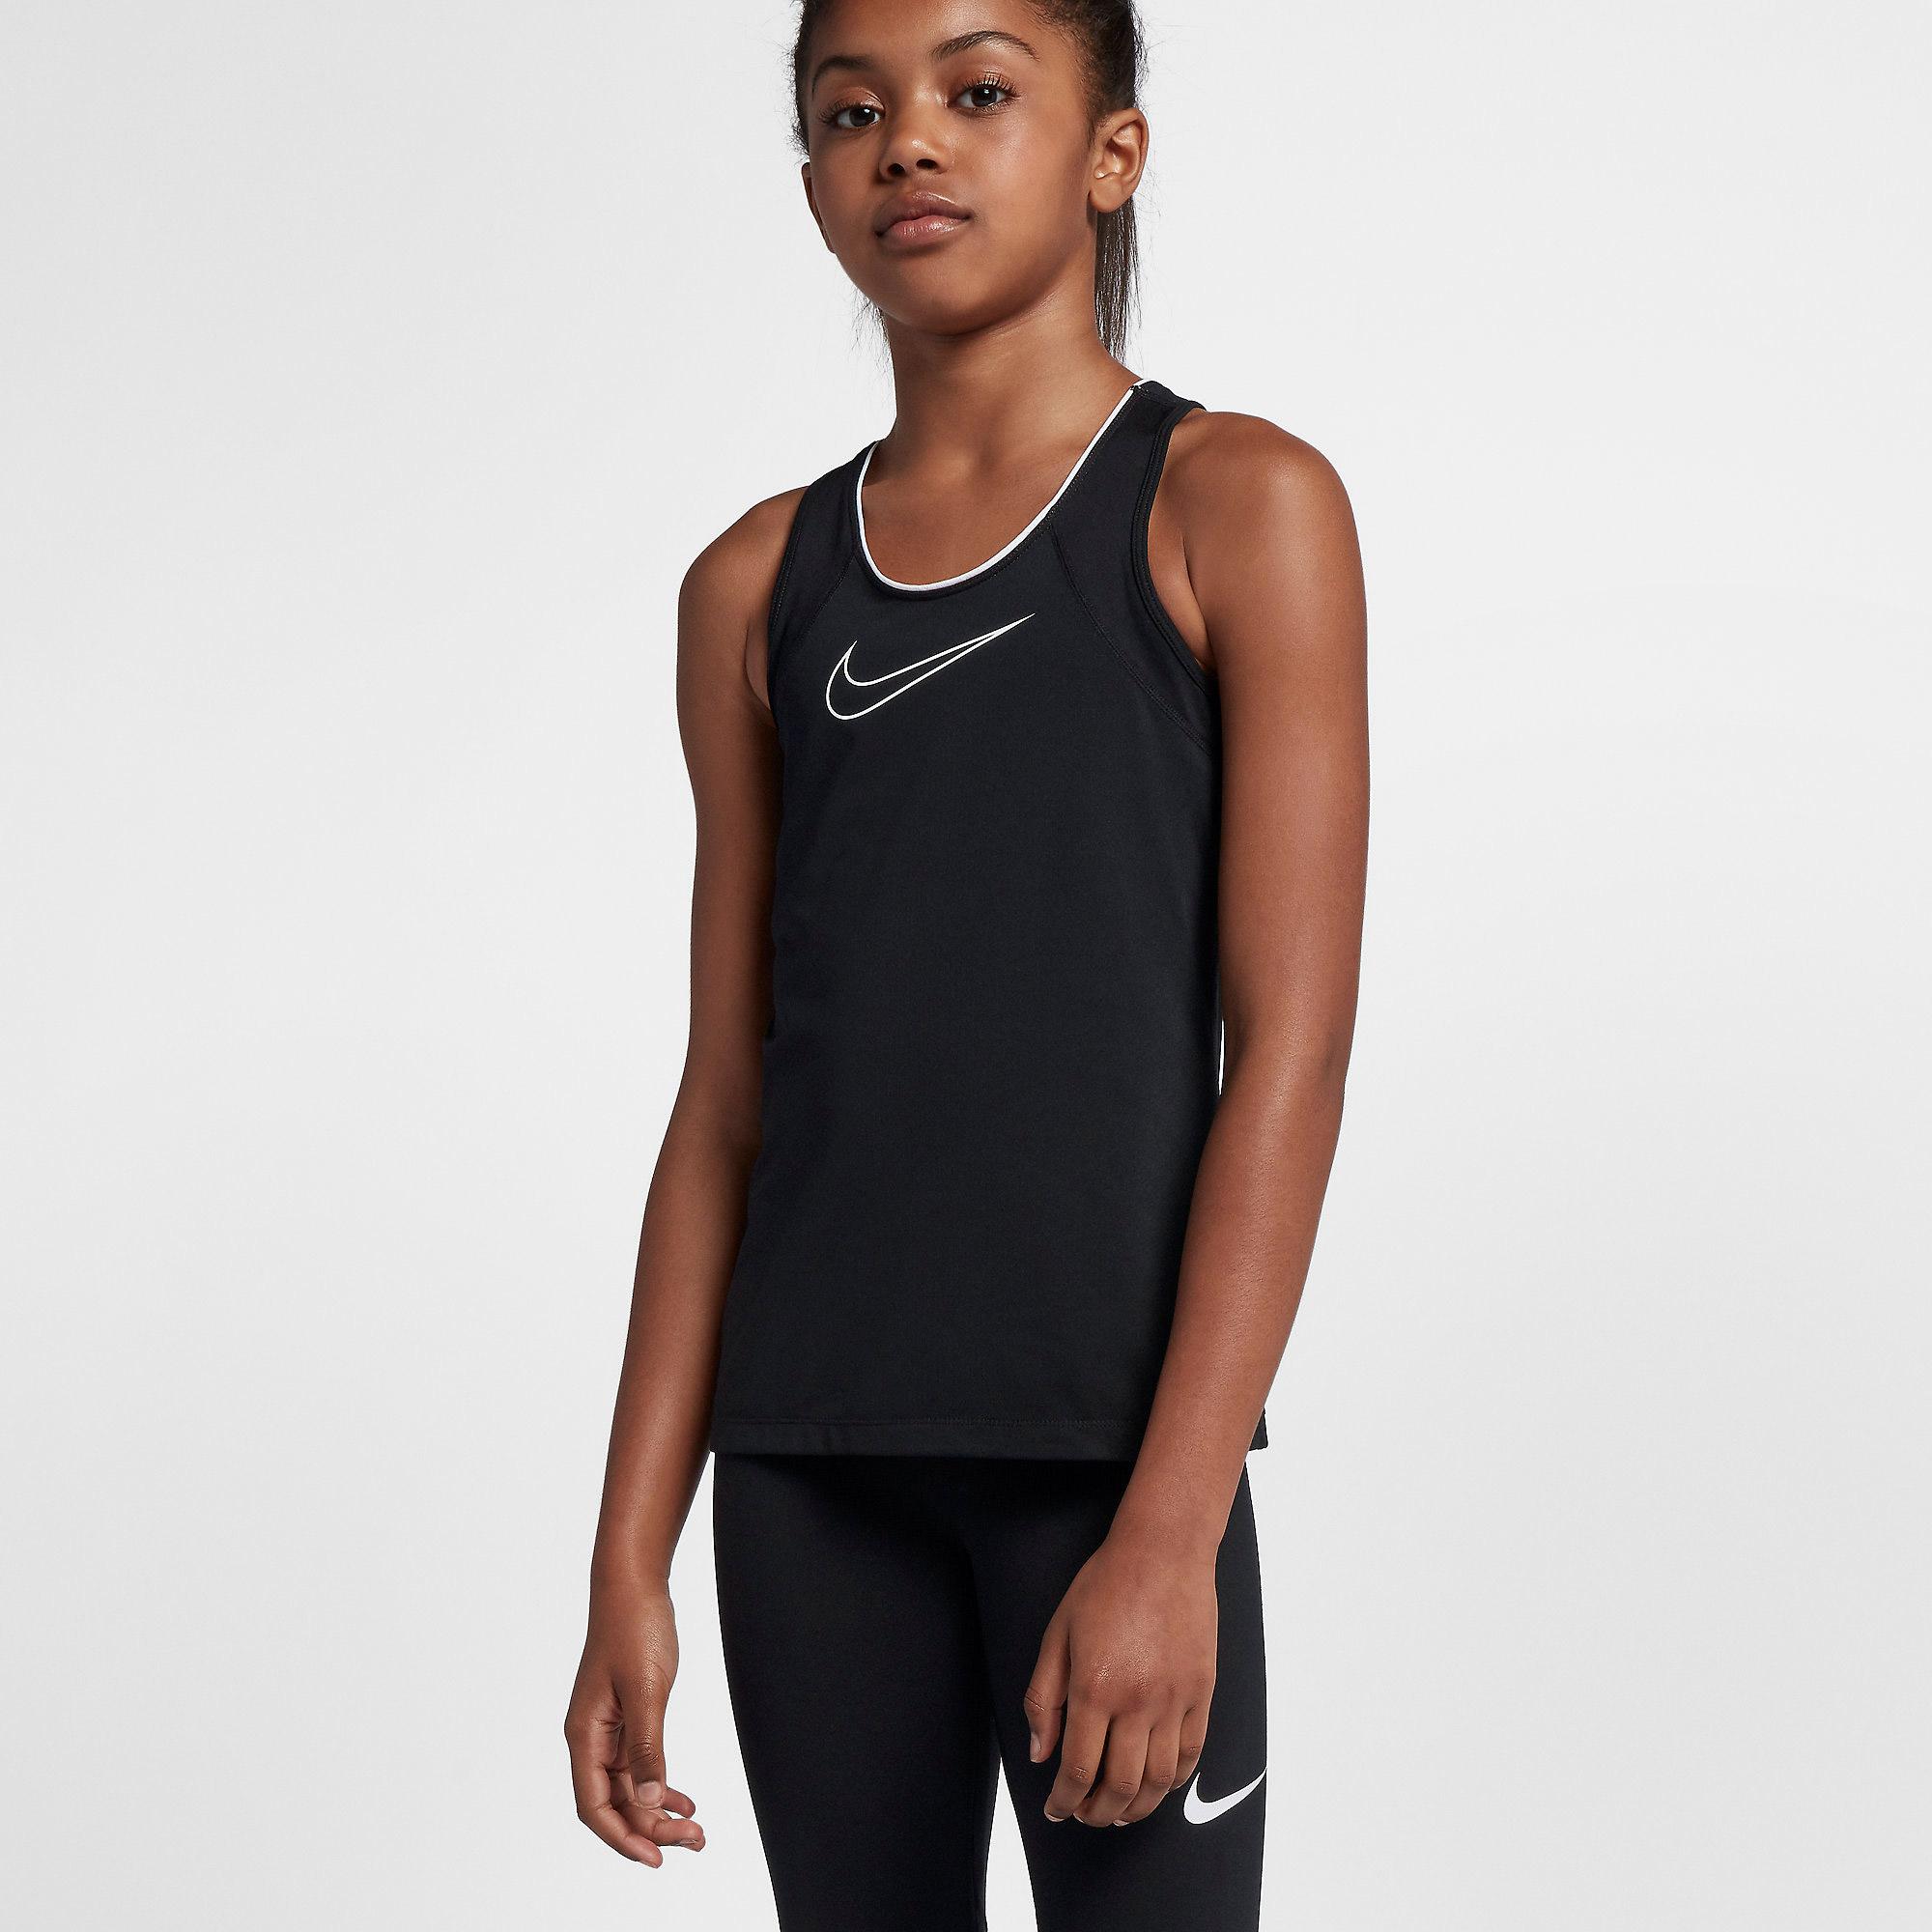 Nike Girls Pro Tank - Black/White - Tennisnuts.com